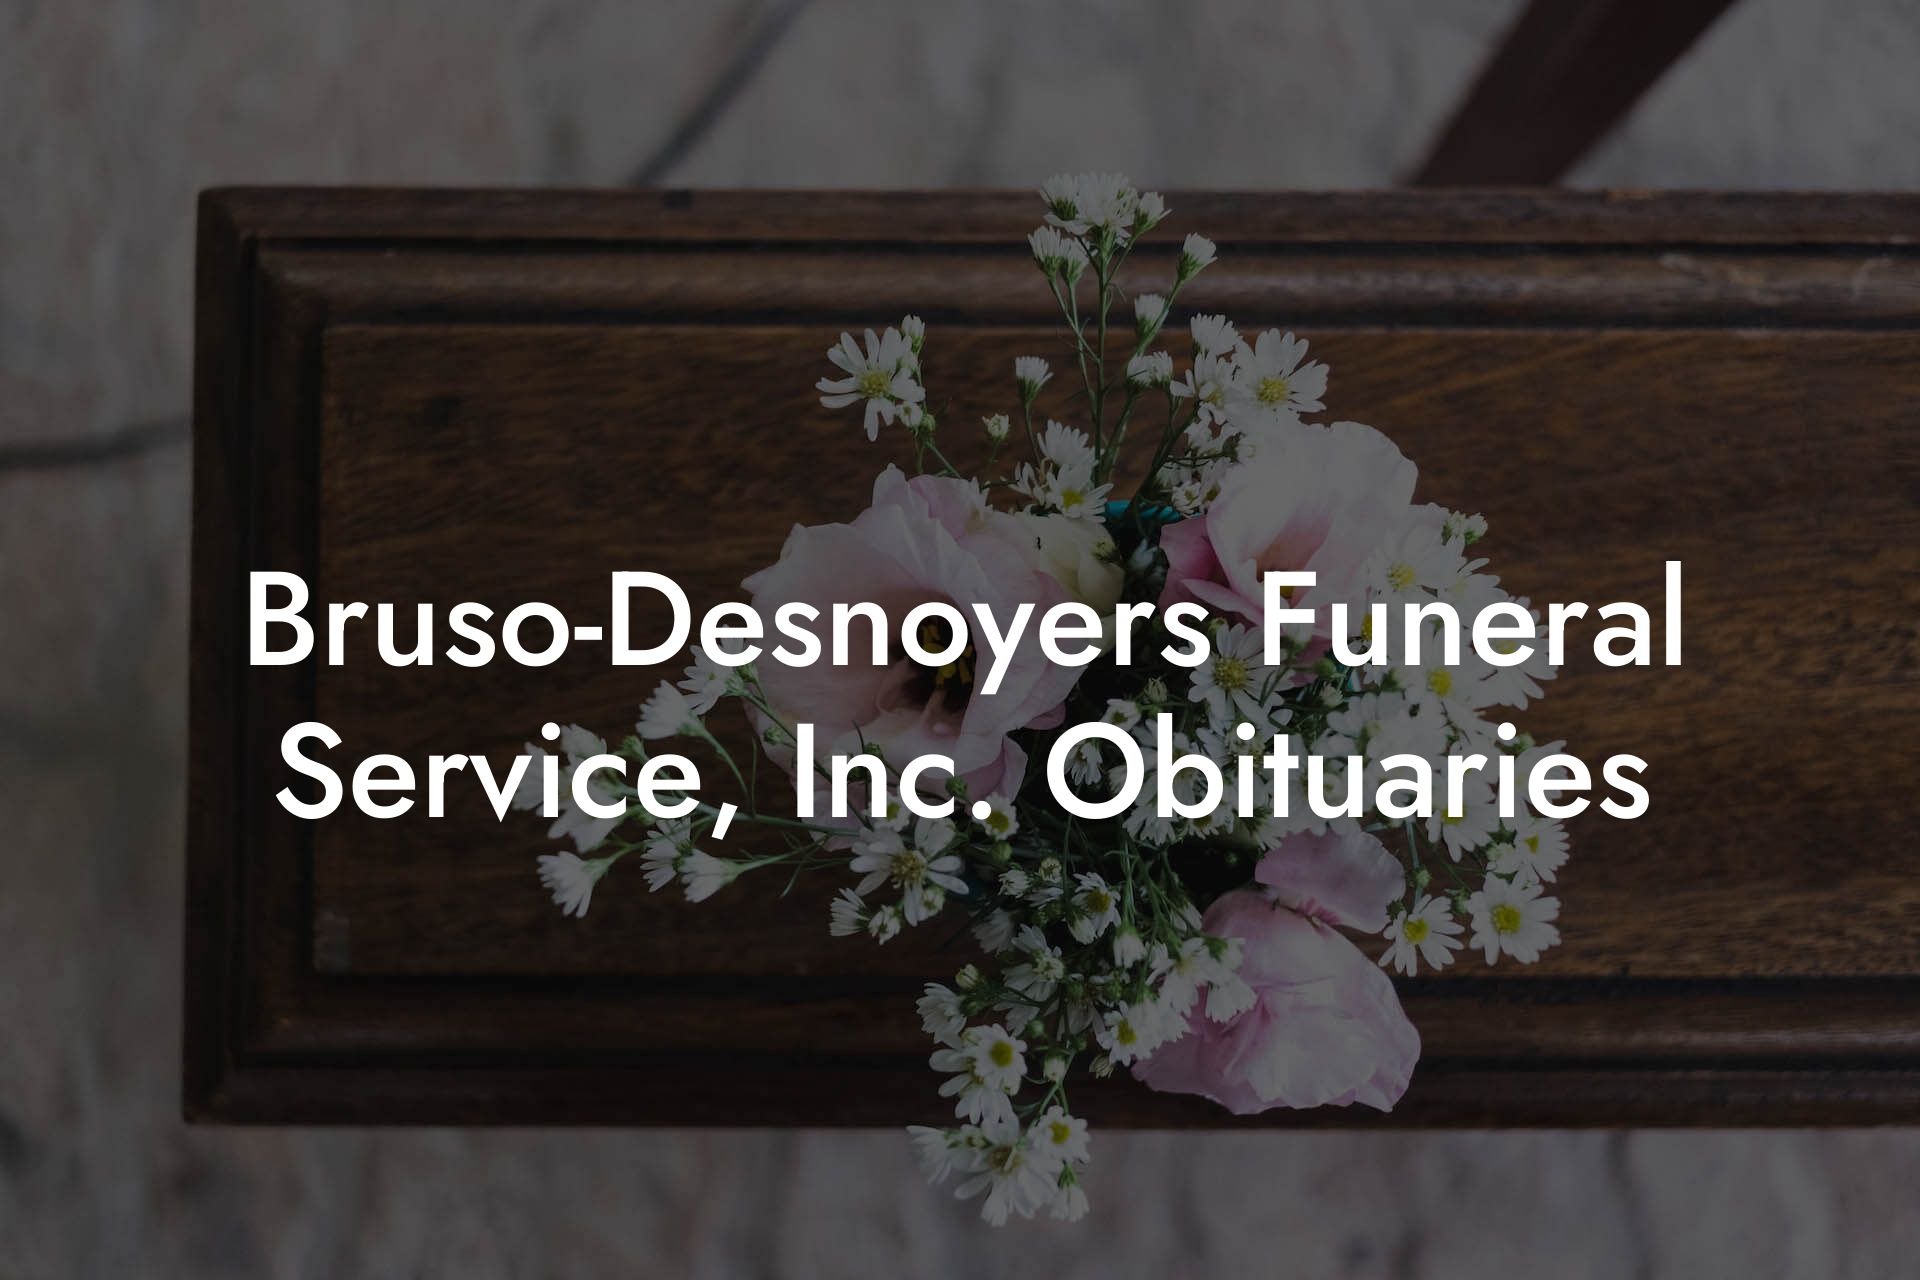 Bruso-Desnoyers Funeral Service, Inc. Obituaries